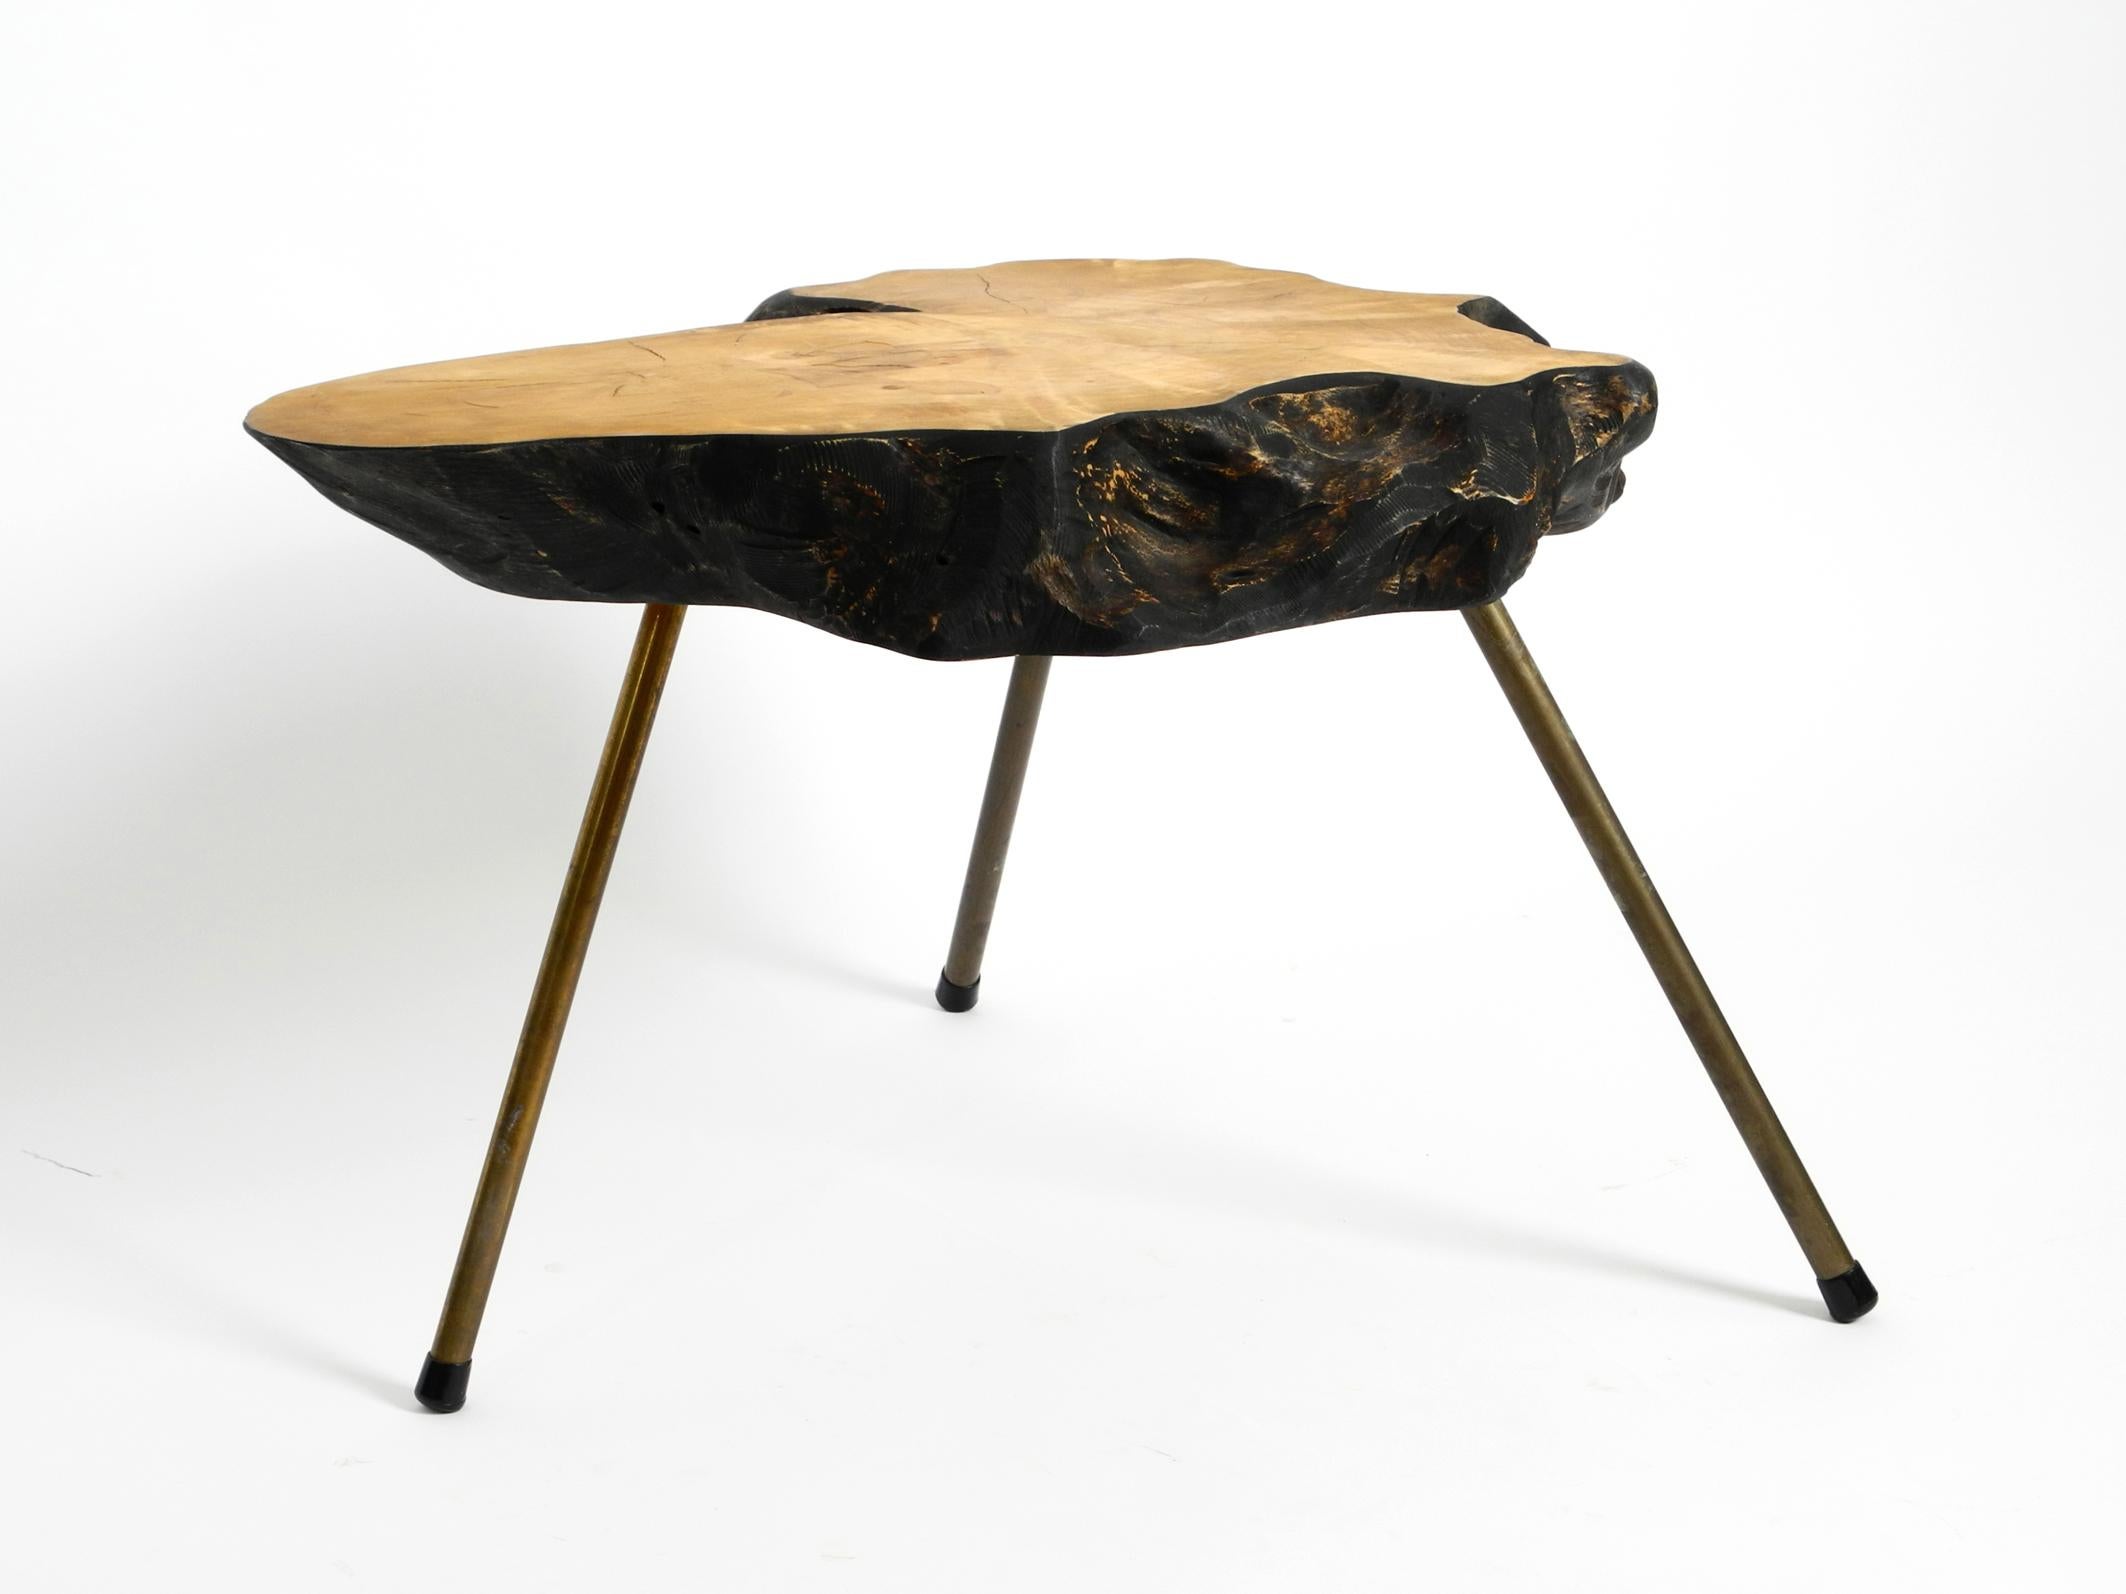 German Rare, Beautiful Midcentury Three-Legged Coffee Table Made of Thick Tree Slice